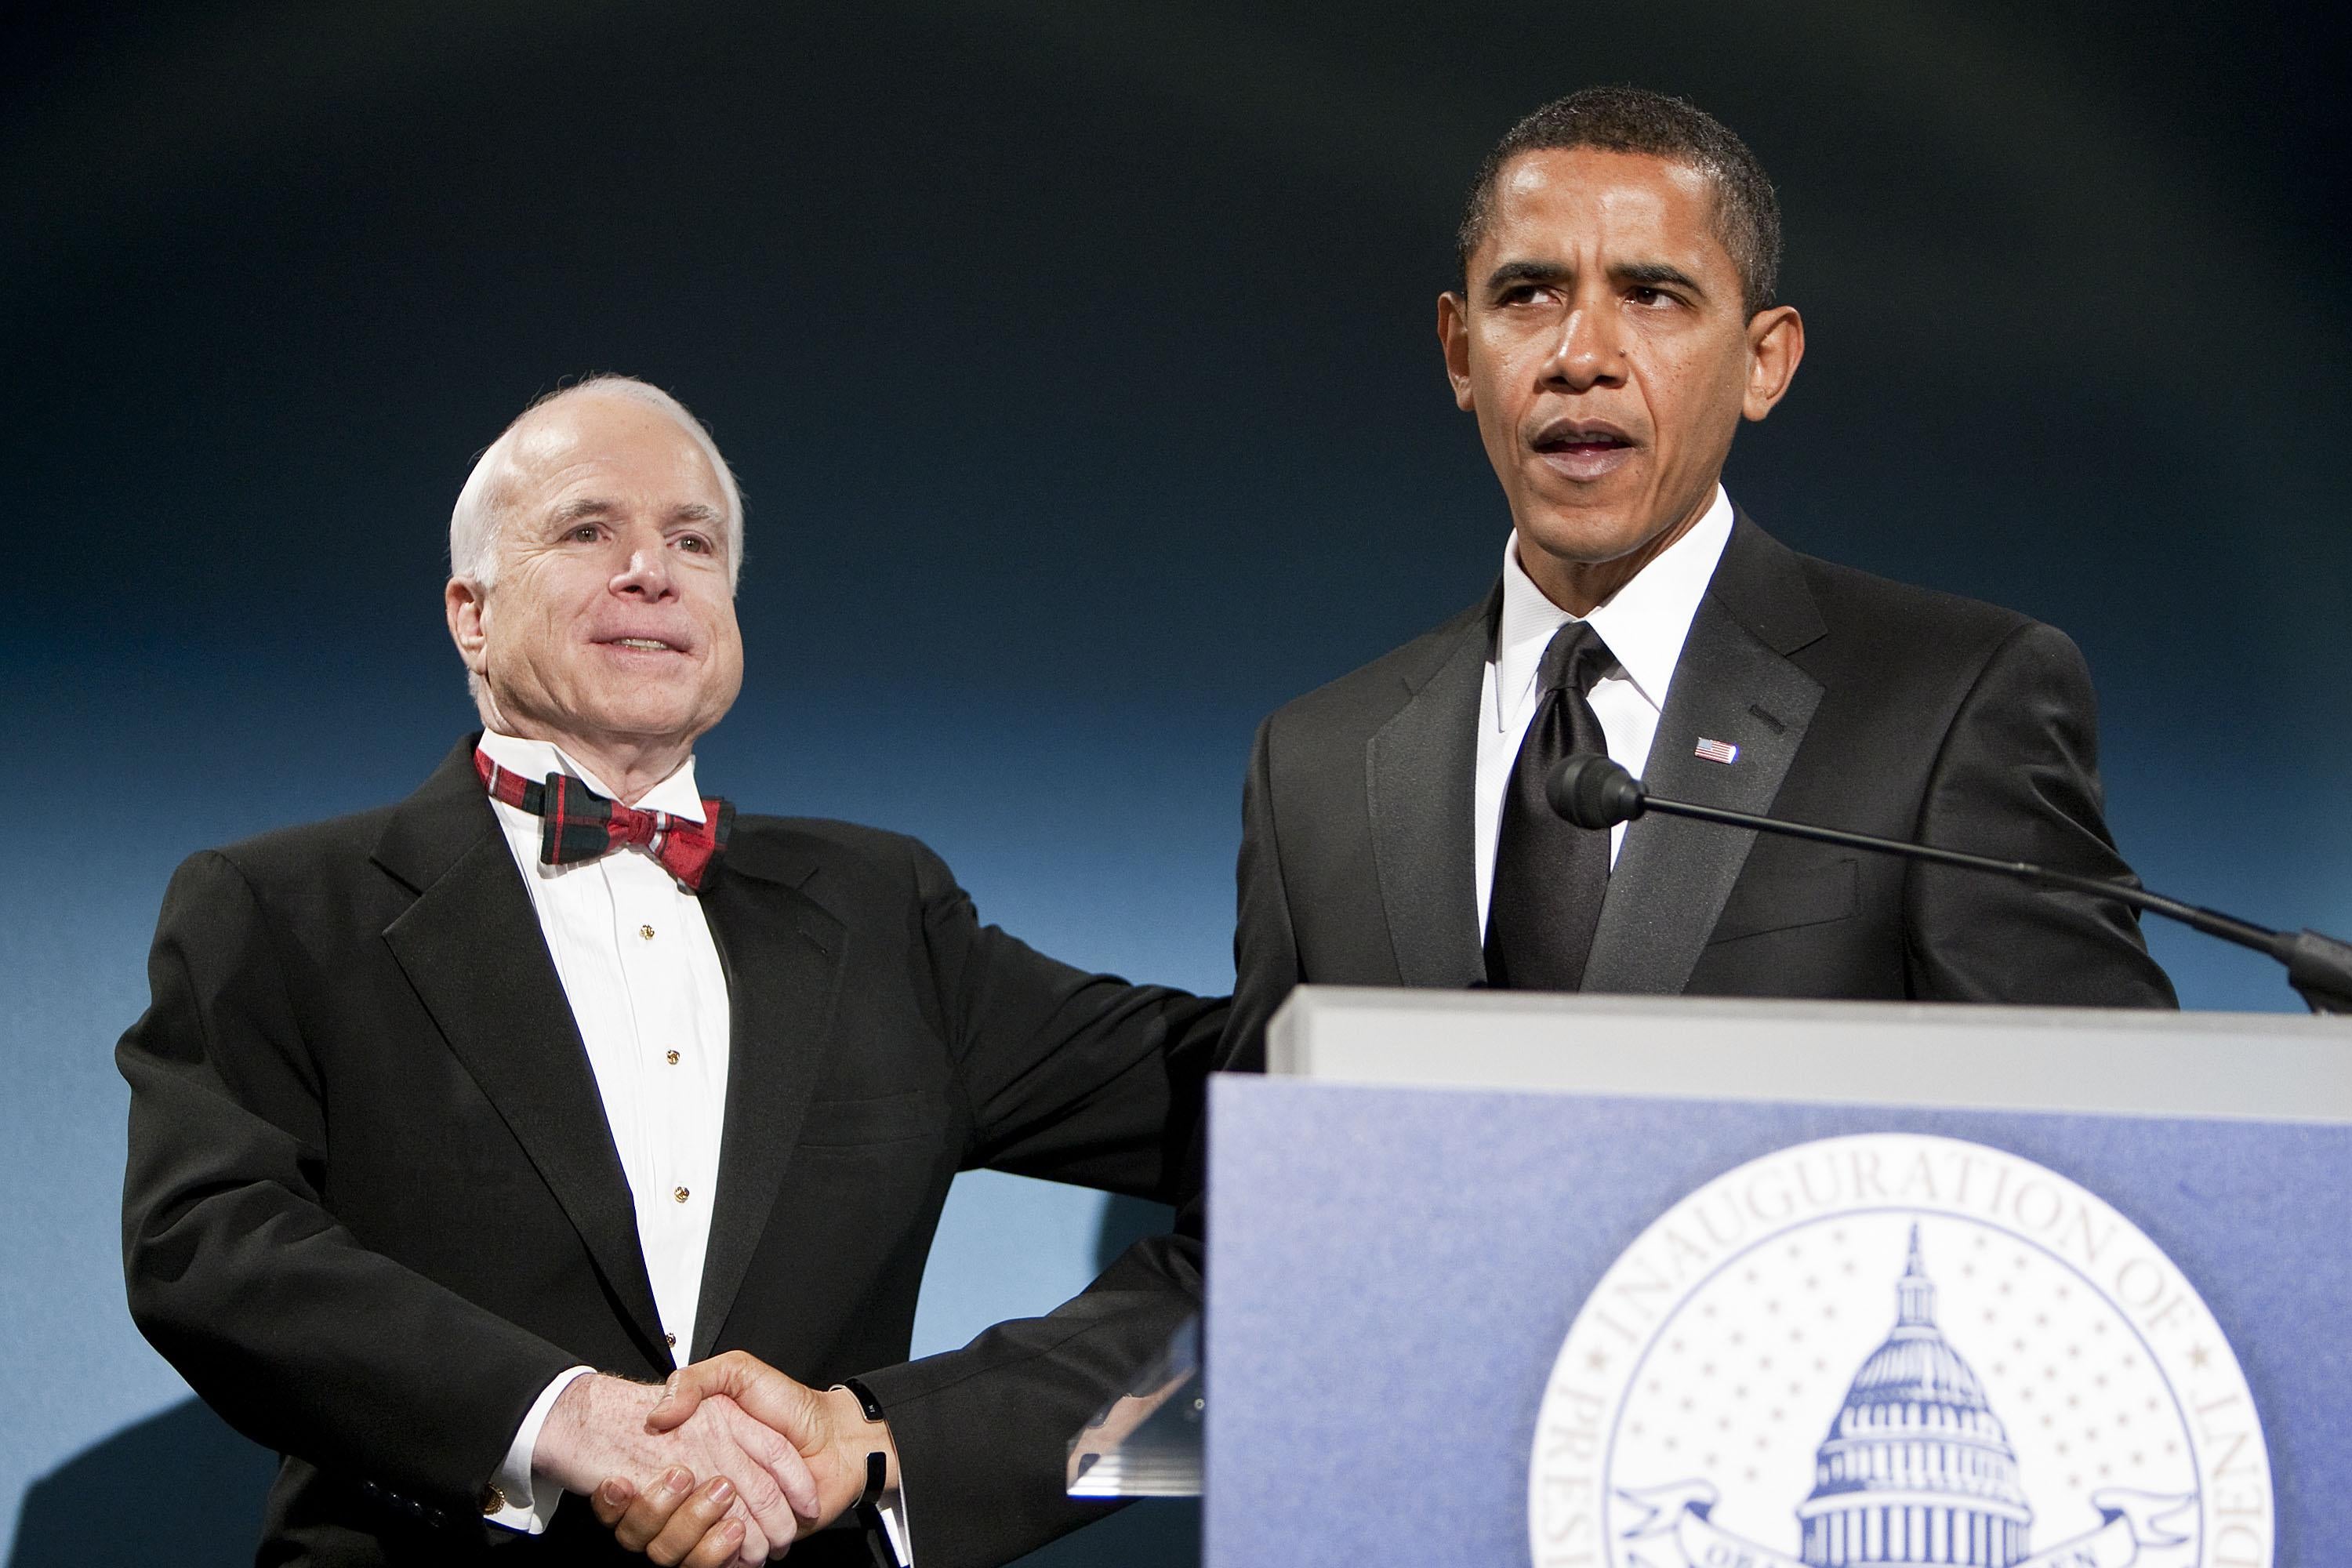 John McCain and Barack Obama share a handshake